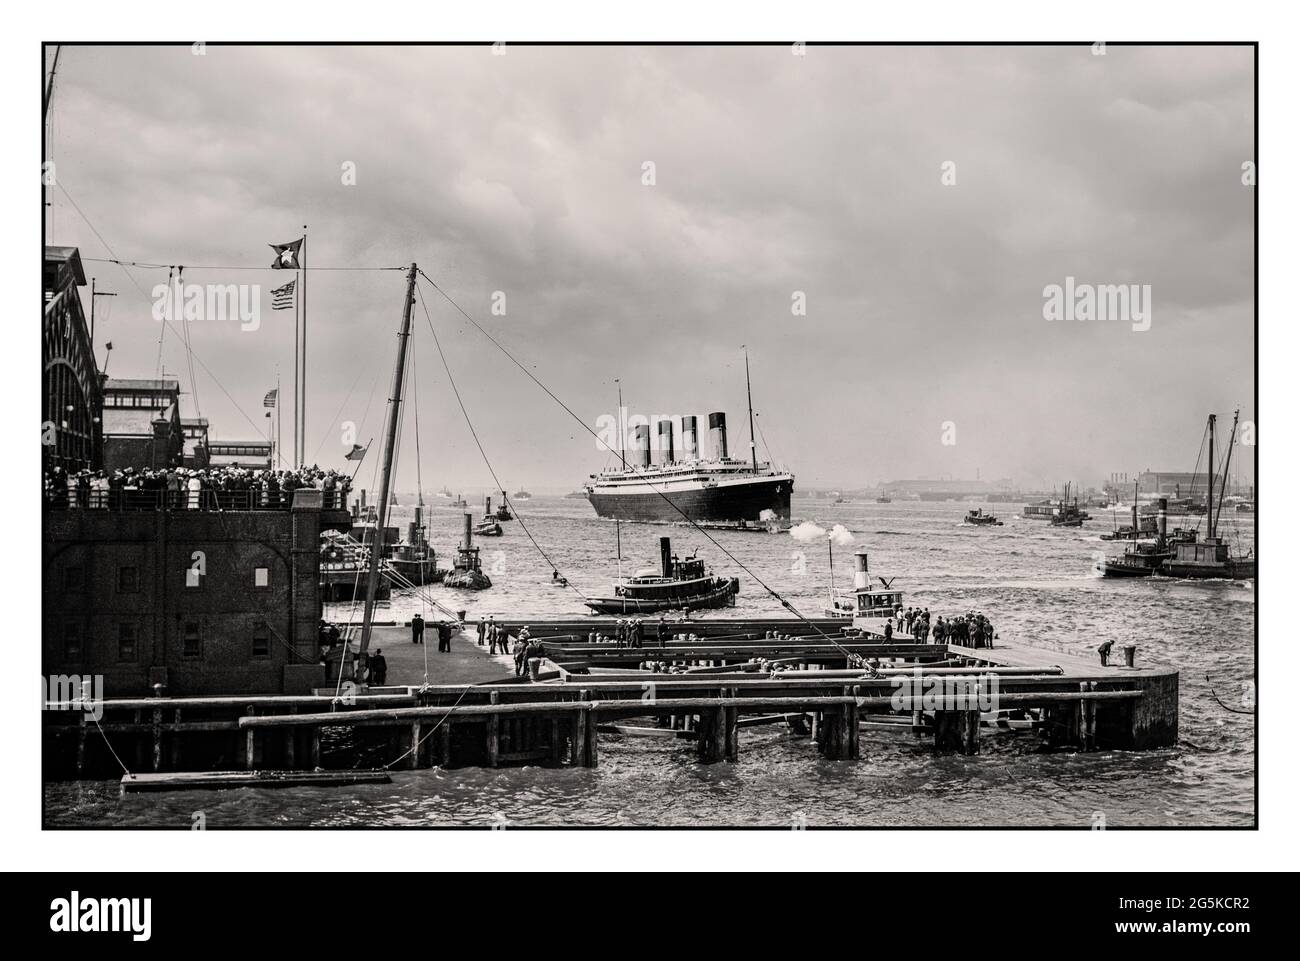 Ankunft RMS OLYMPIC 1911 Anlegestelle Massen Schlepper New York Harbor USA Bain News Service, Herausgeber 1911 Steam Ship Schwesterschiff zu RMS Titanic White Star Line Four Funnel Transatlantic Luxus-Dampfschiff Ocean Liner 1900 Stockfoto